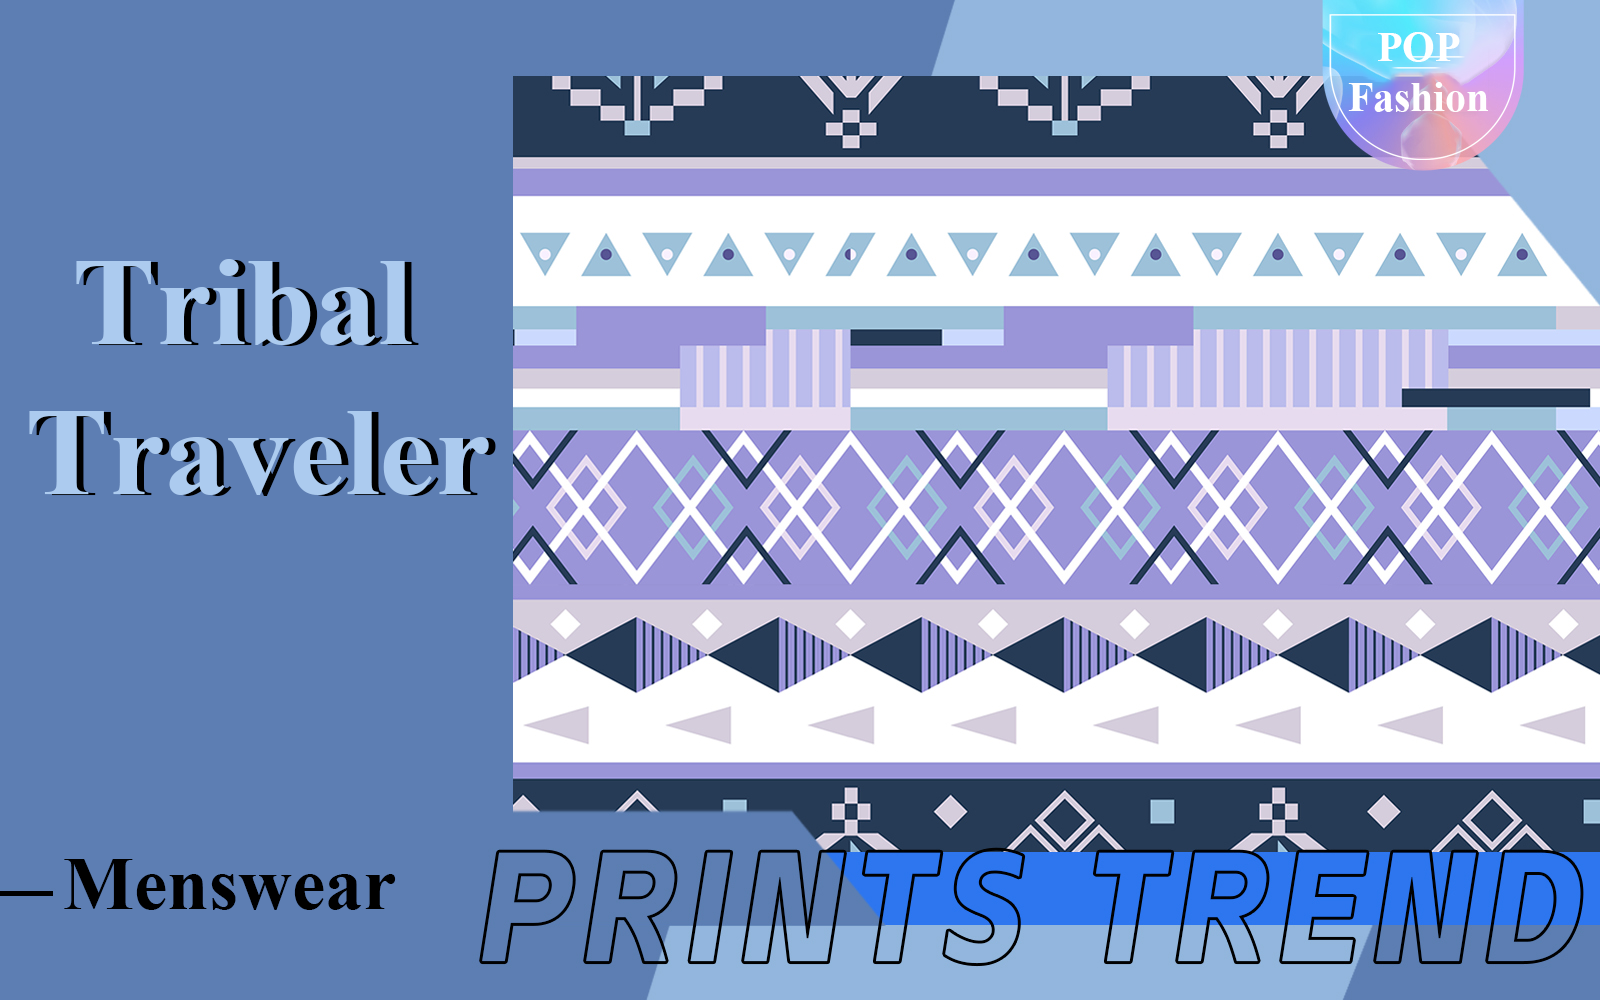 Tribal Traveler -- The Pattern Trend for Menswear